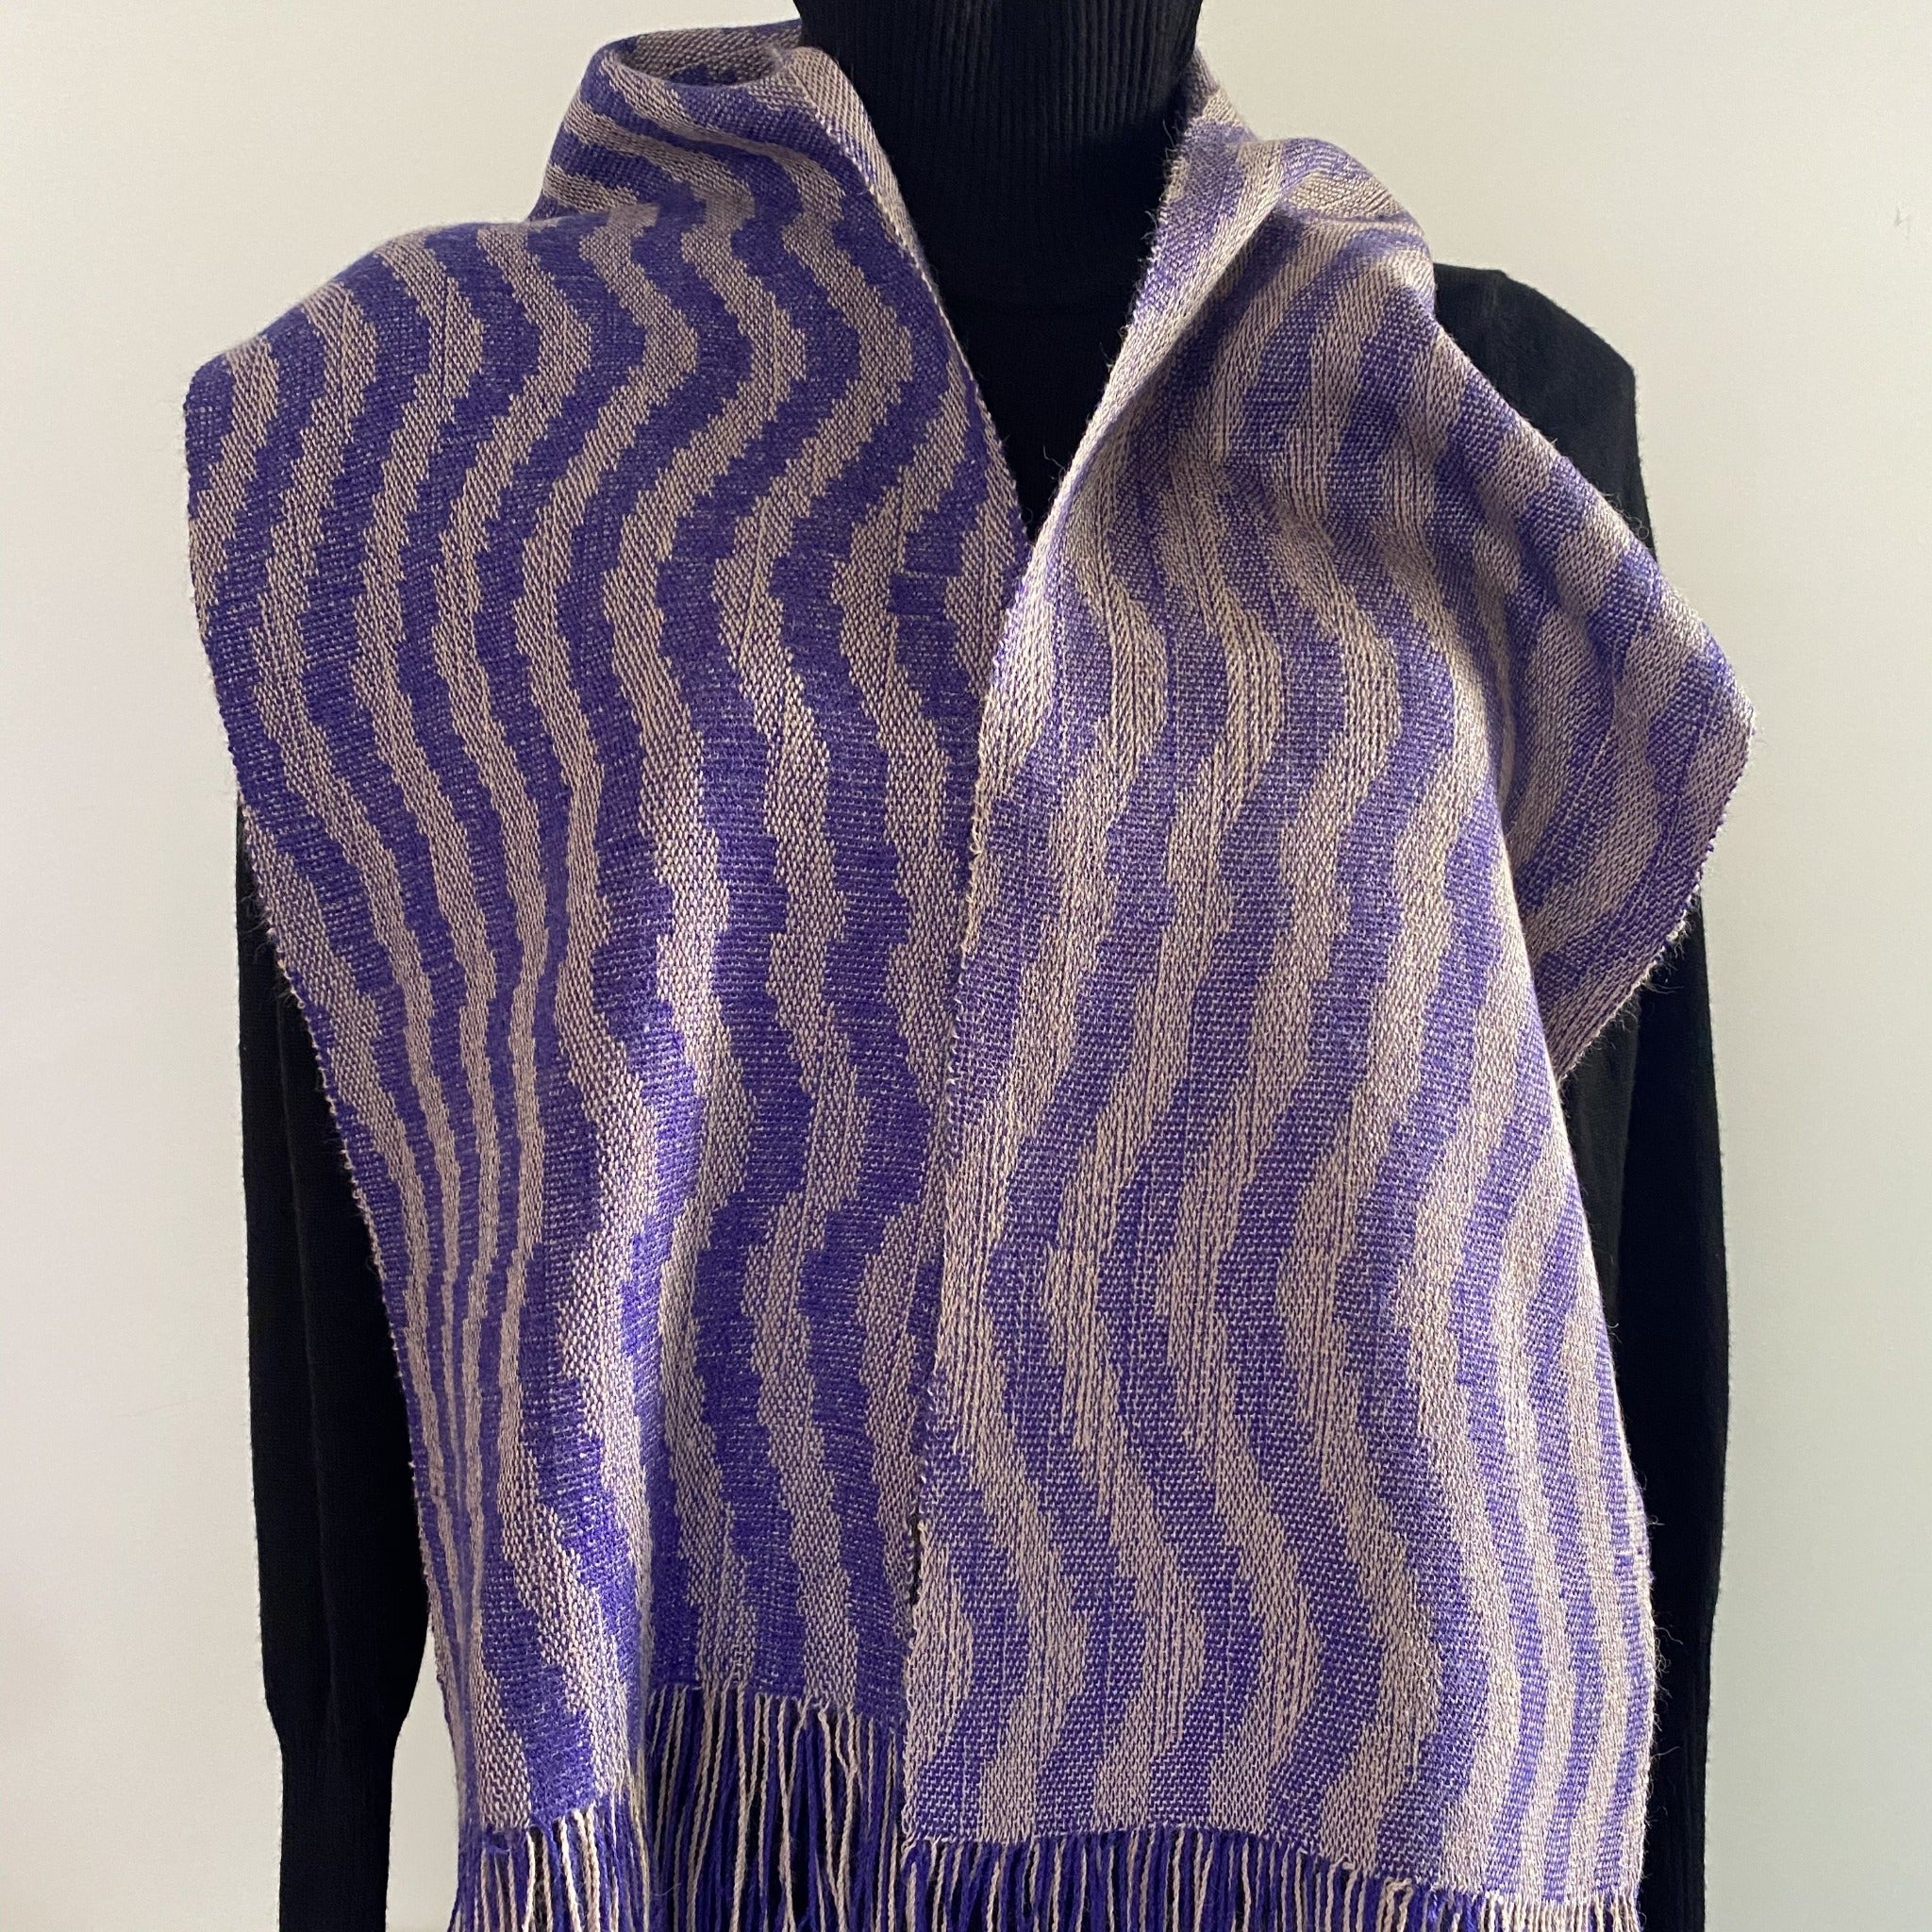 Alpaca/silk scarf "Skies" handwoven by Joy Dodd